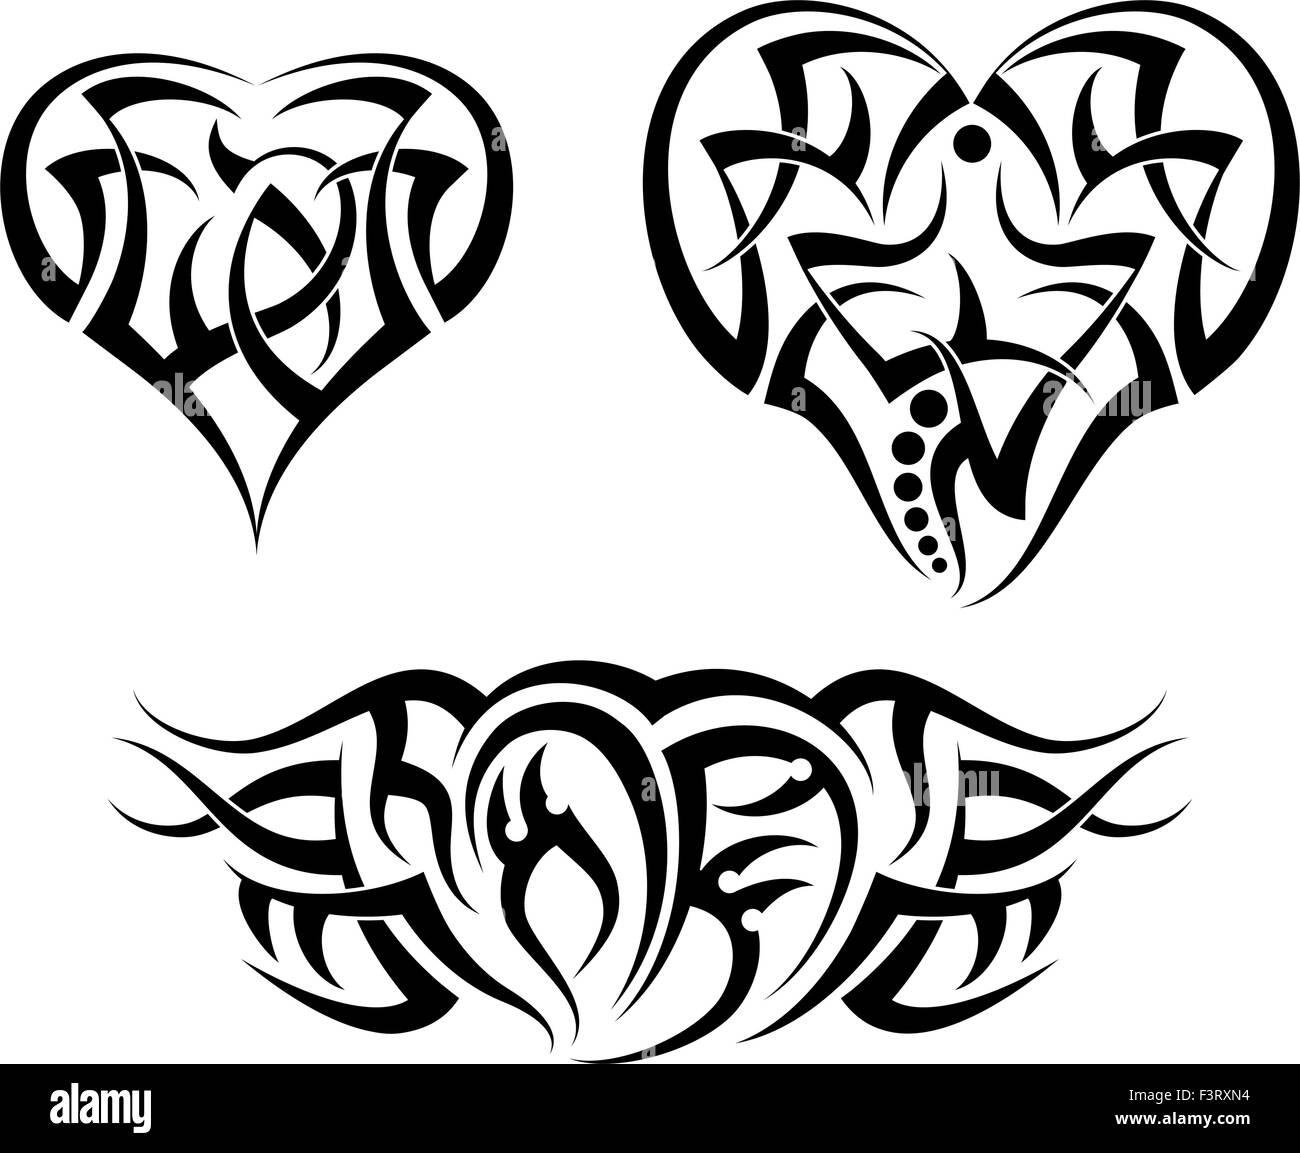 Tattoo Heart Design Vector Art Stock Vector Image & Art - Alamy